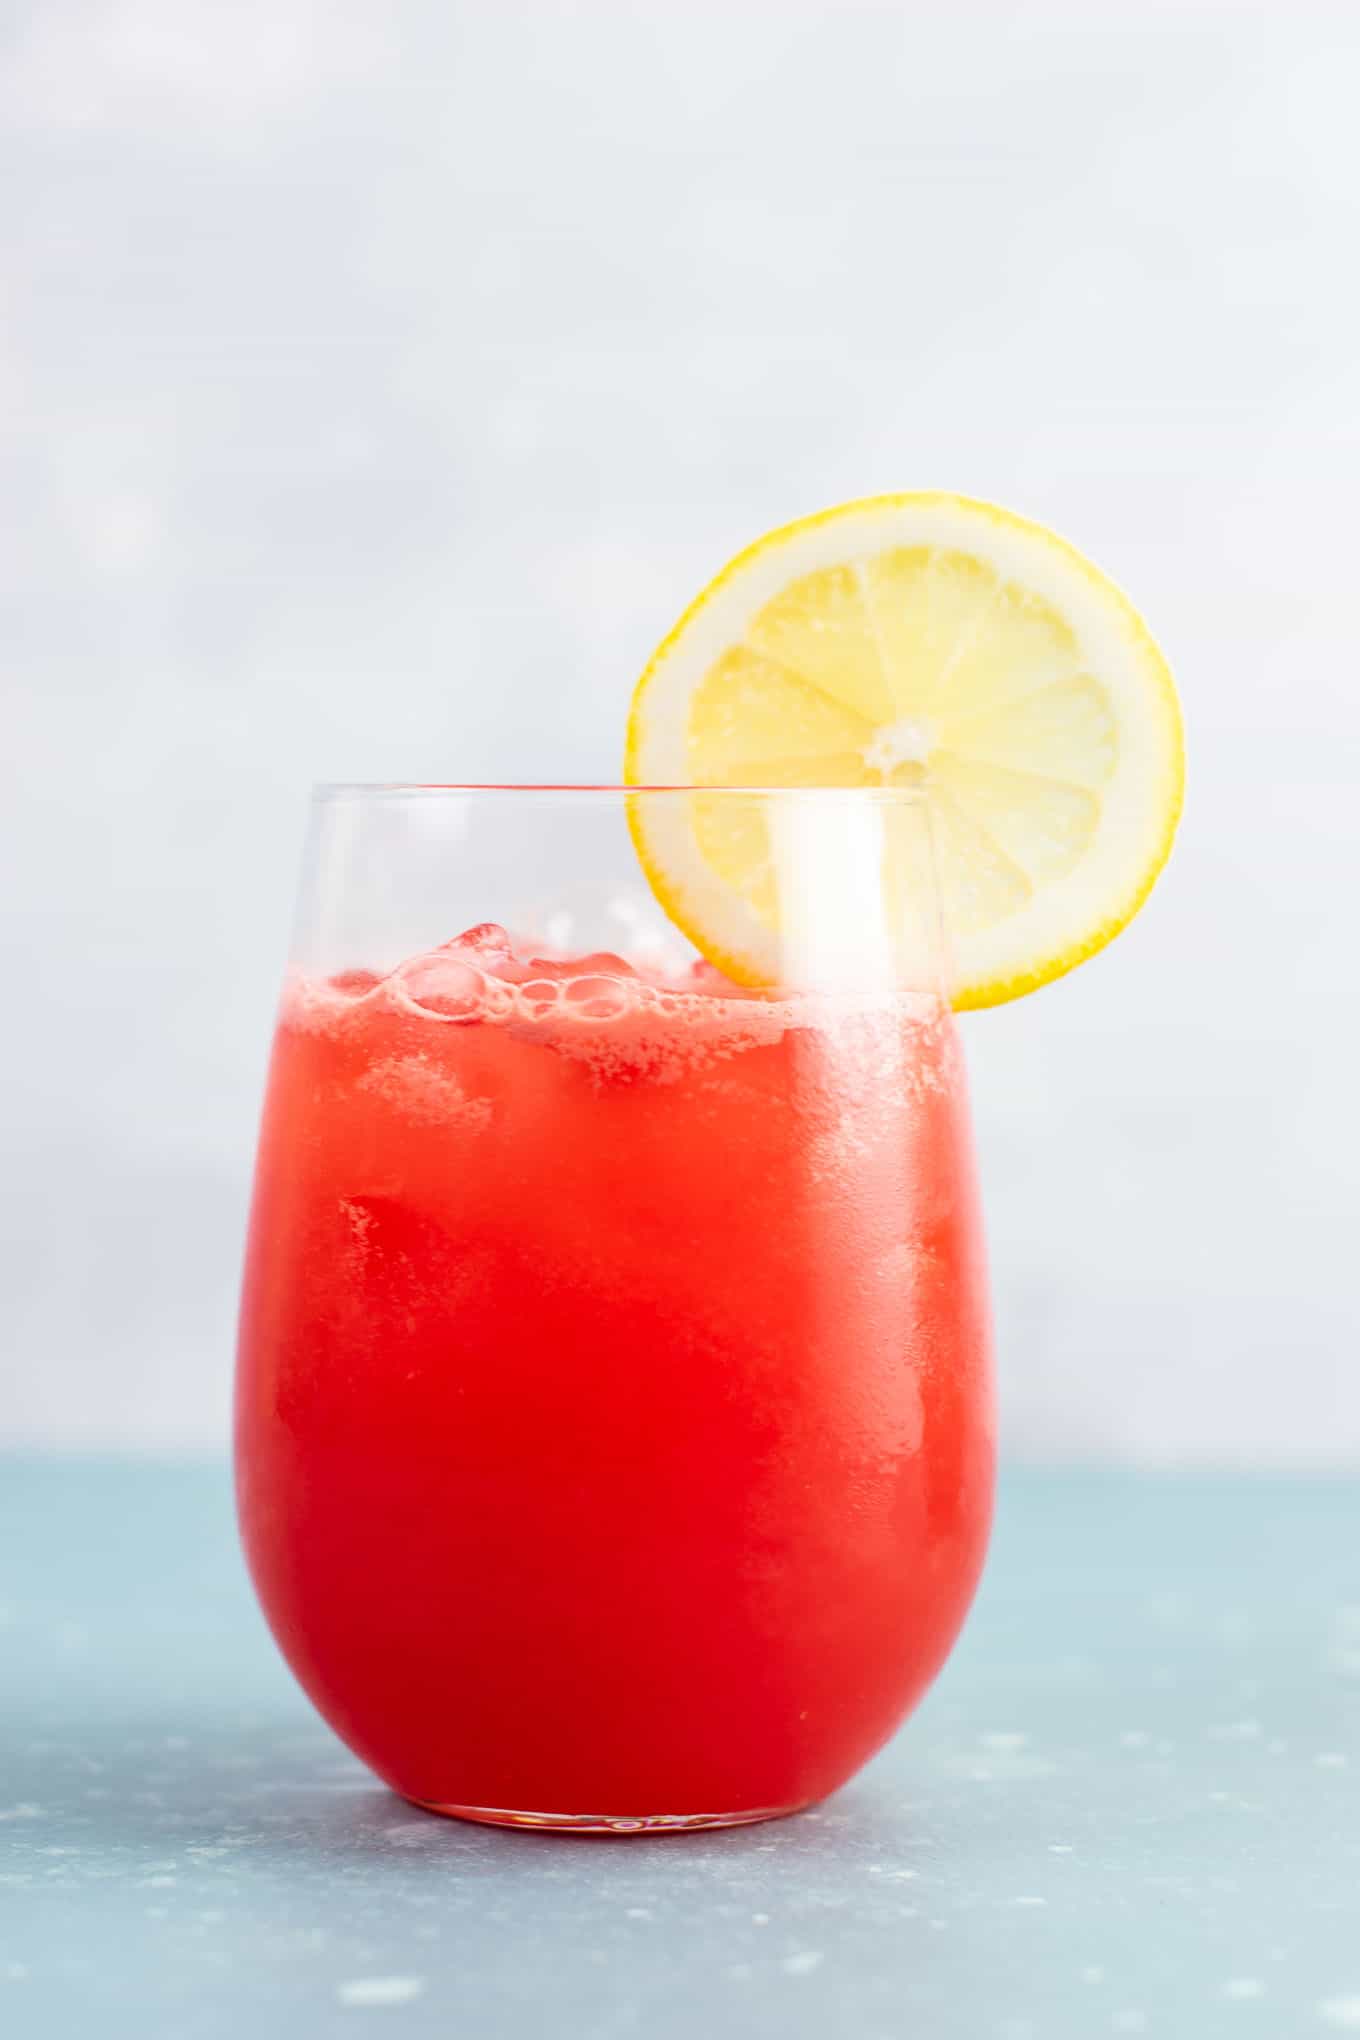 Sparkling watermelon lemonade recipe (naturally sweetened) refreshing summer drink! #watermelon #lemonade #watermelonlemonade #healthydrink #summerdrink #easyrecipe #watermelondrink